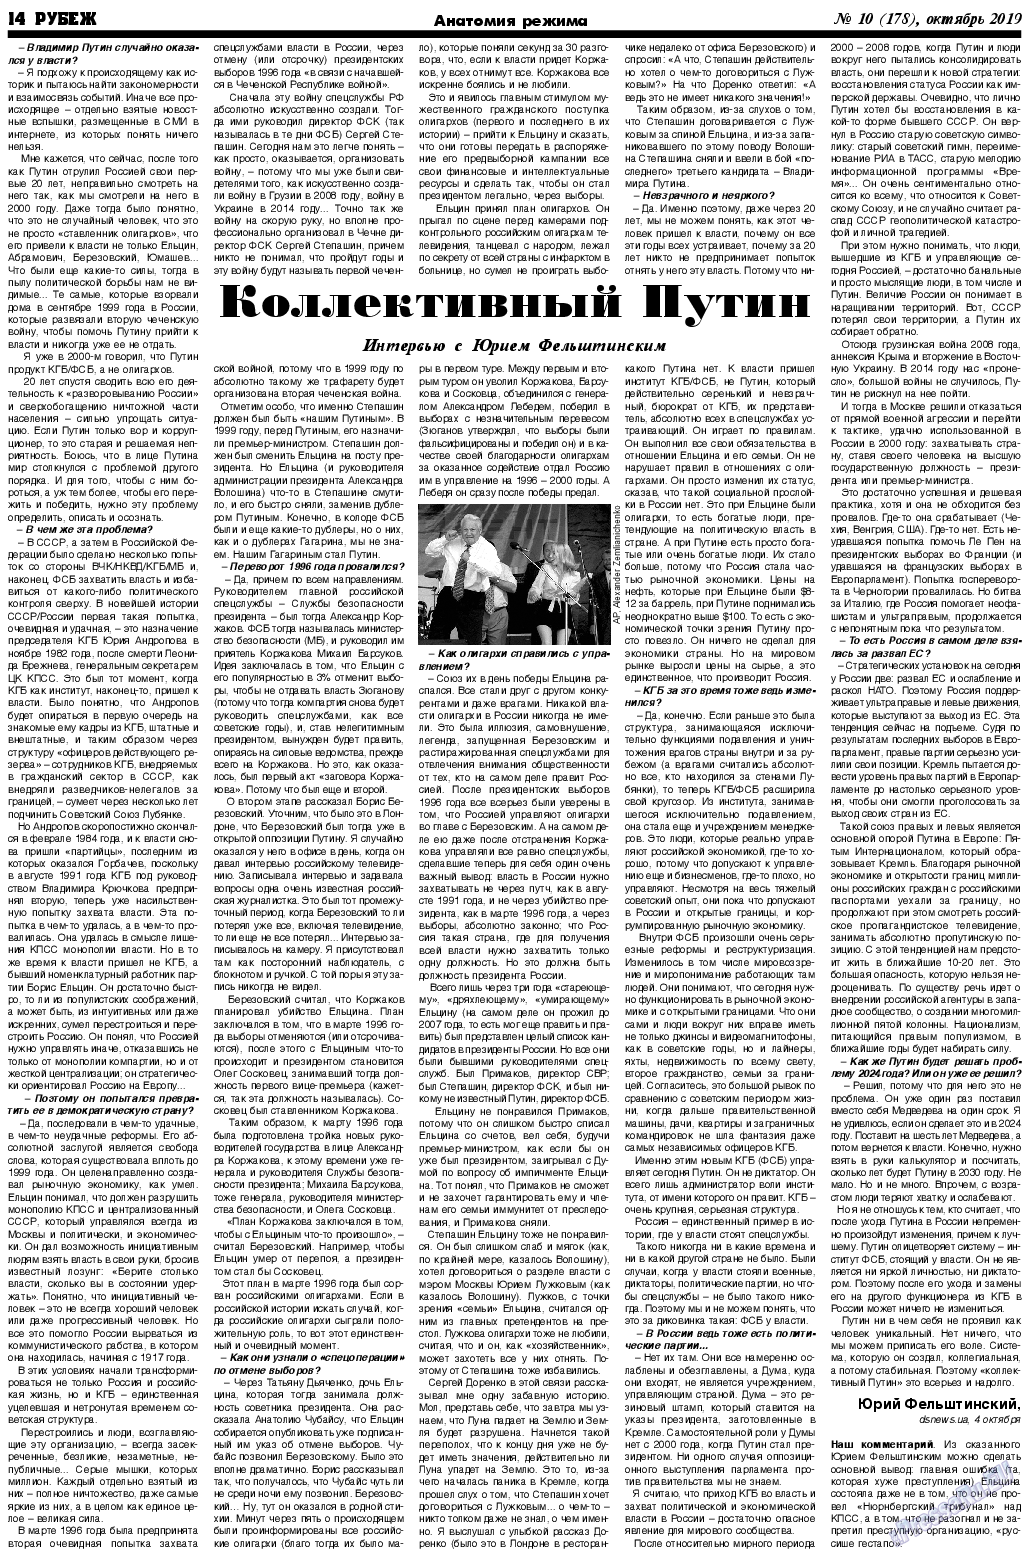 Рубеж, газета. 2019 №10 стр.14